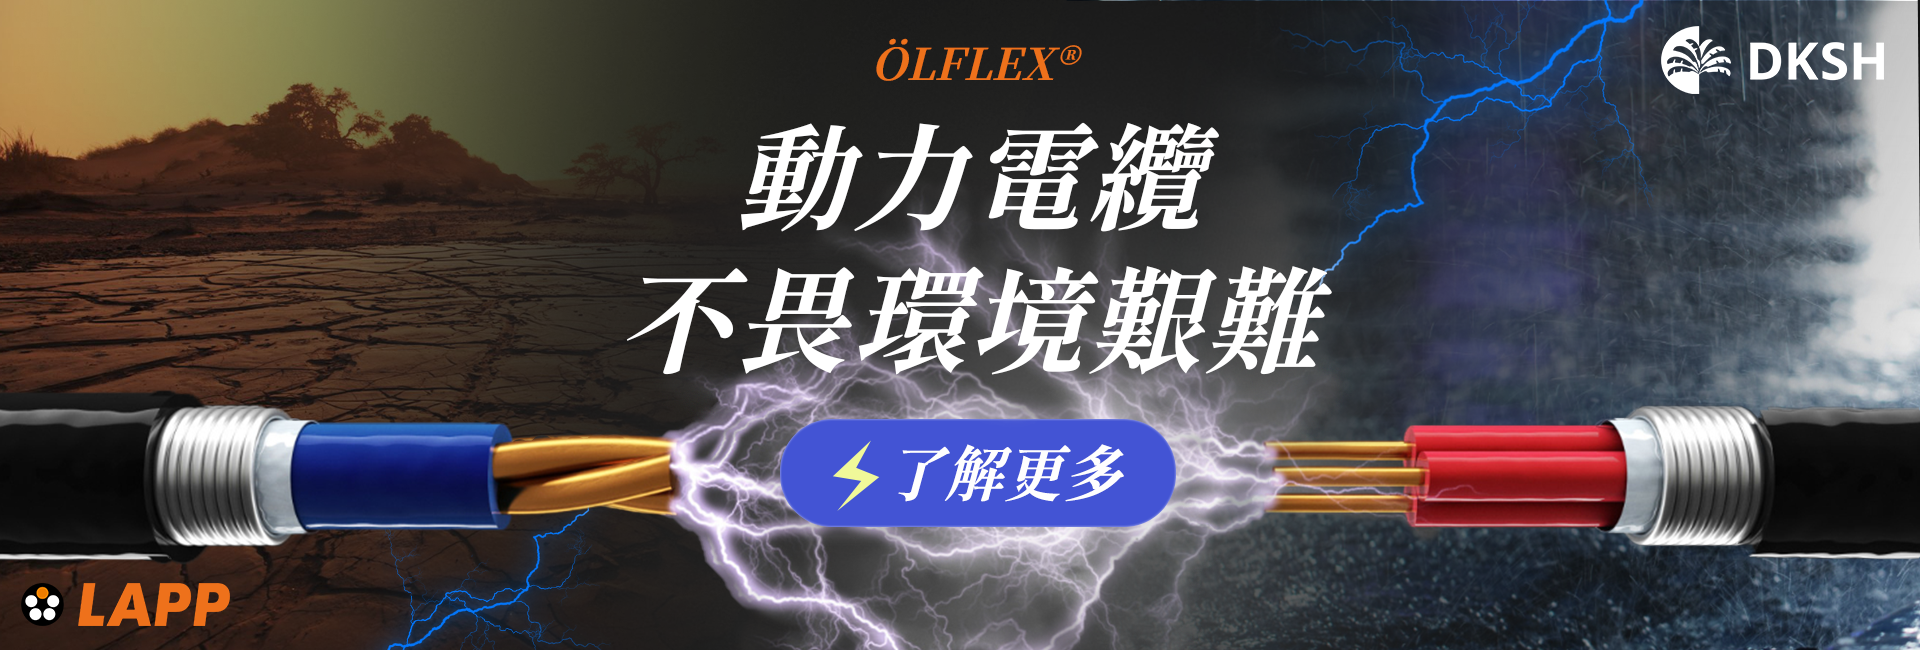 ÖLFLEX®  動力電纜 不畏環境艱難